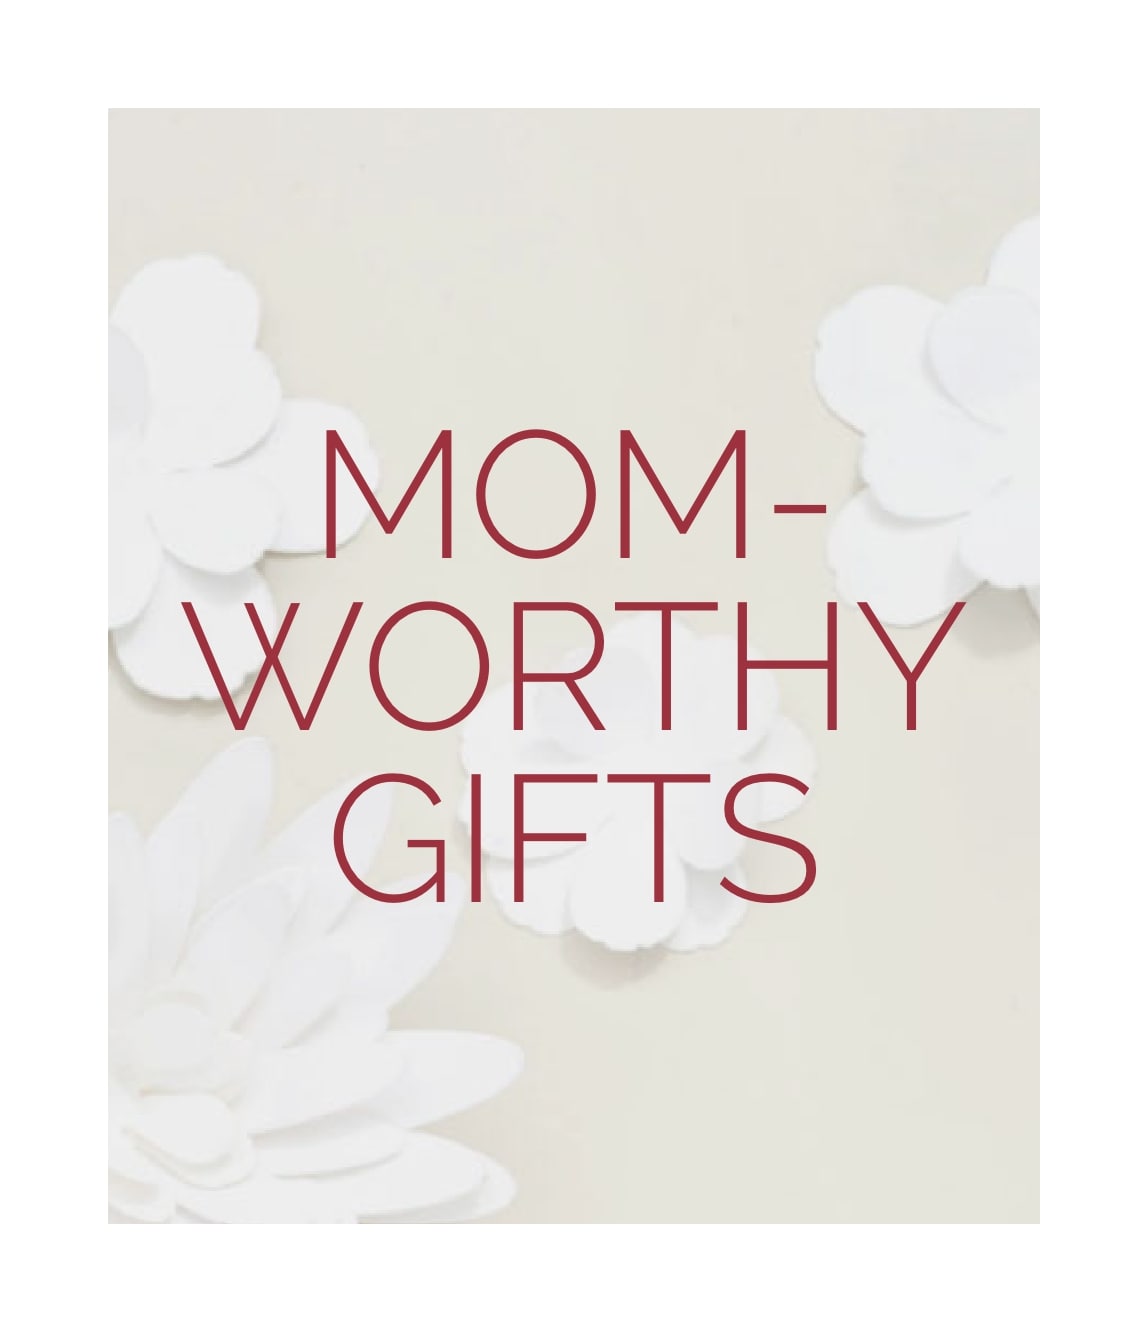 MOM-WORTHY GIFTS